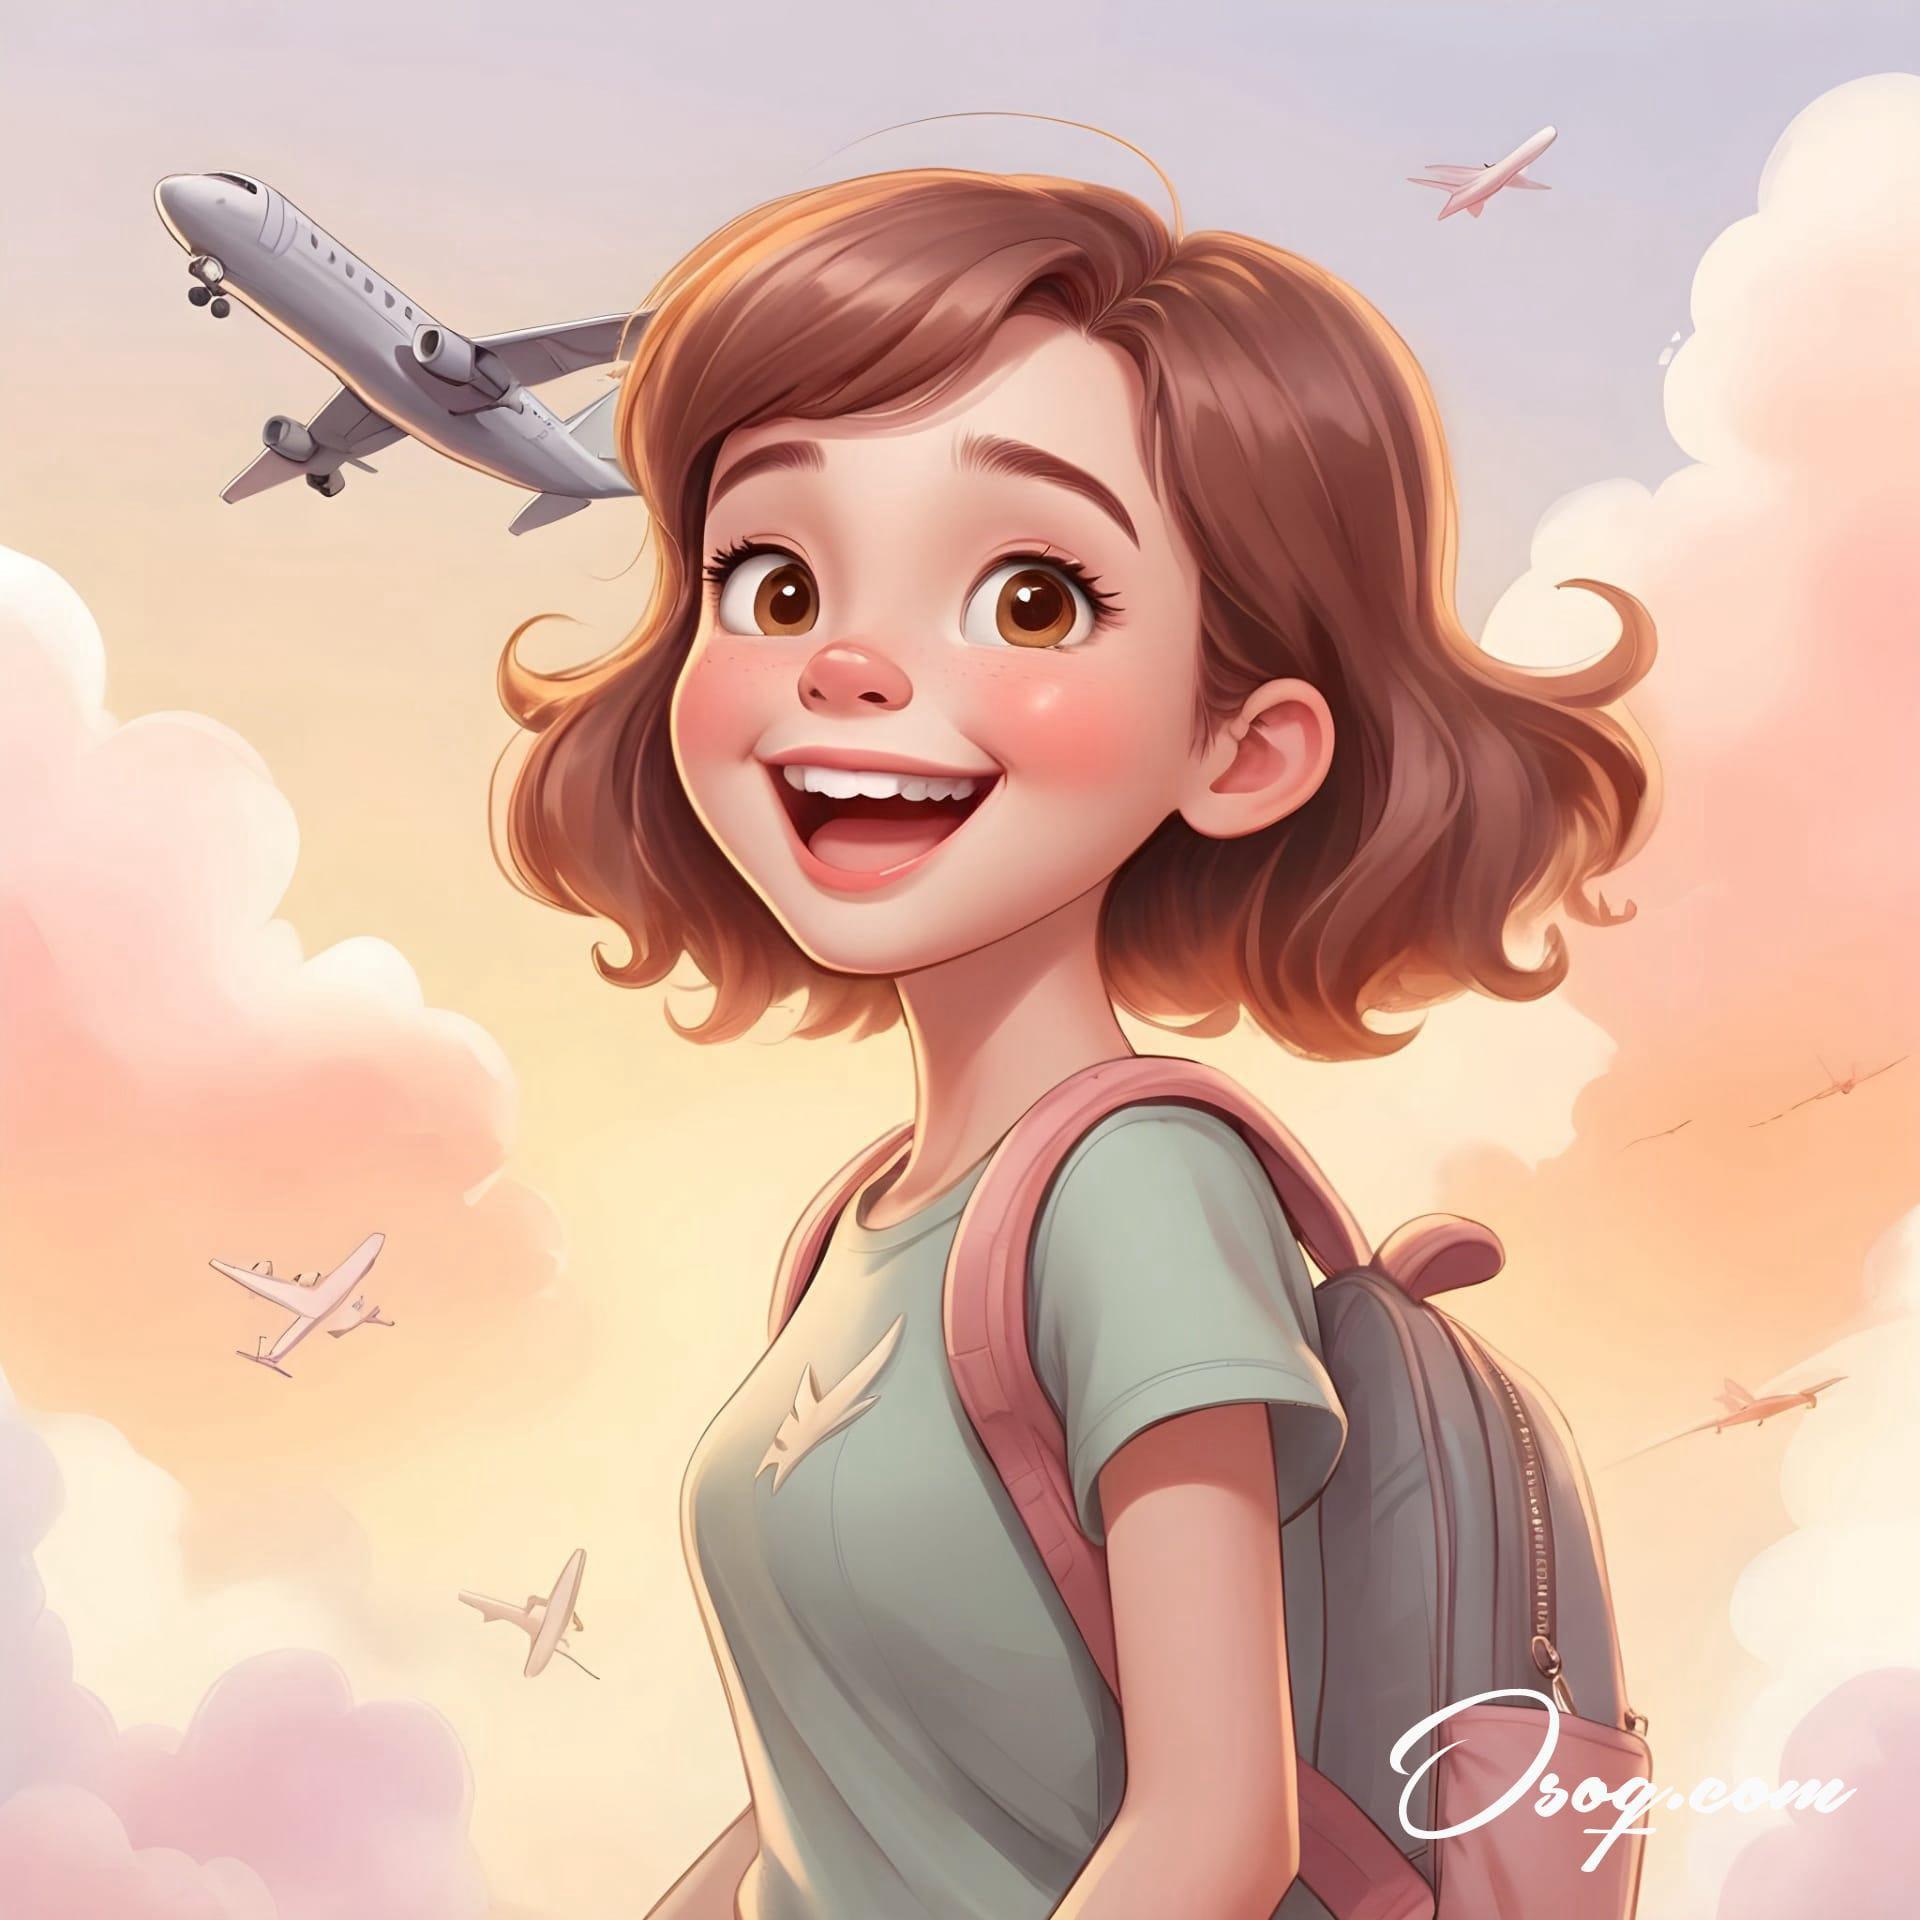 Airplane caricature 07